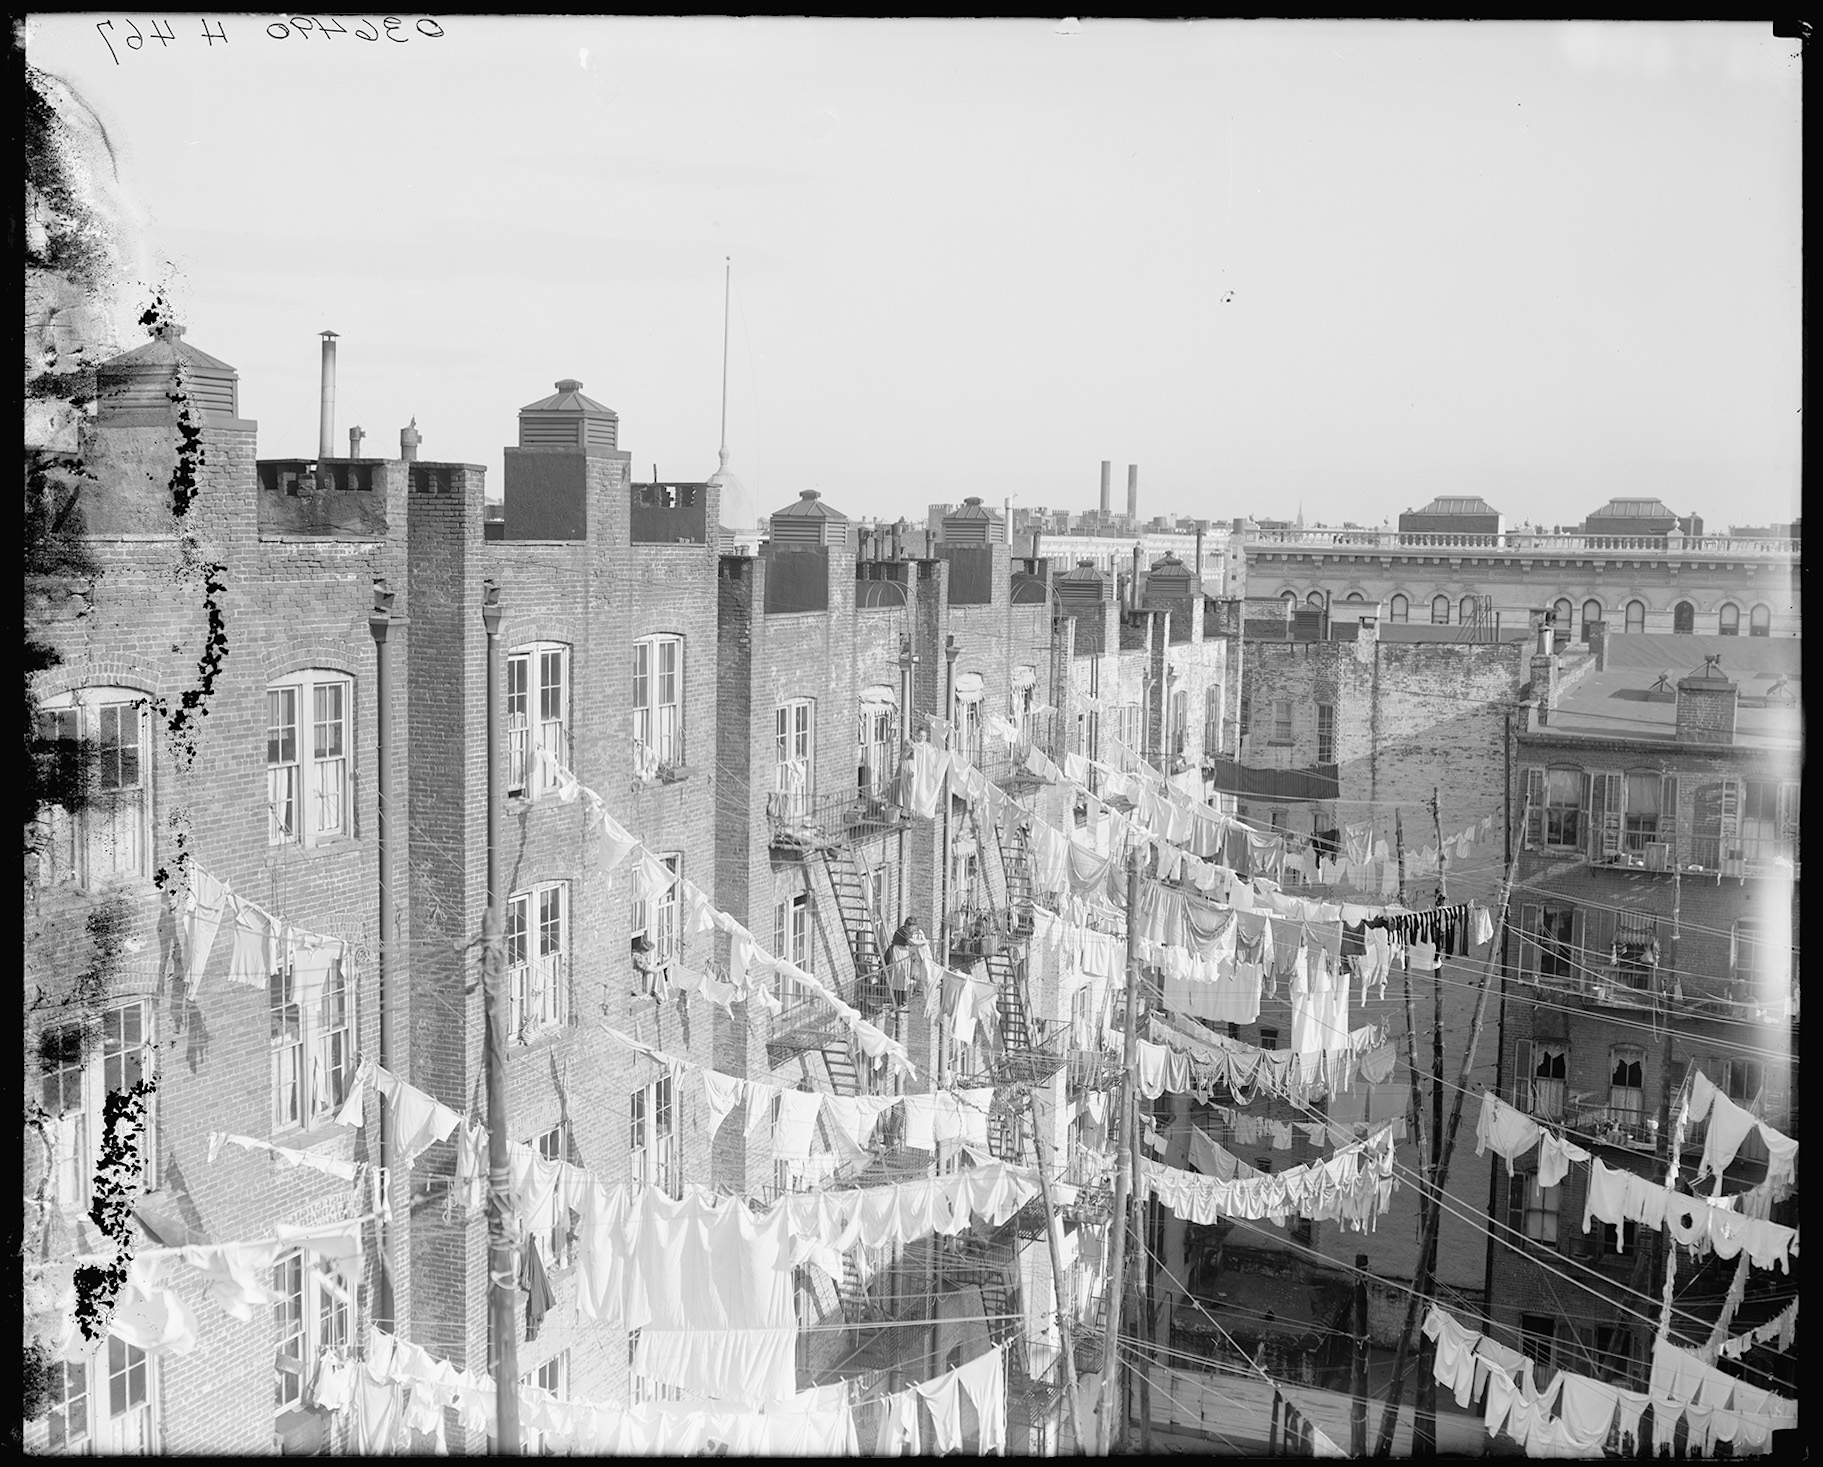 New York City tenement yards in the early twentieth century.